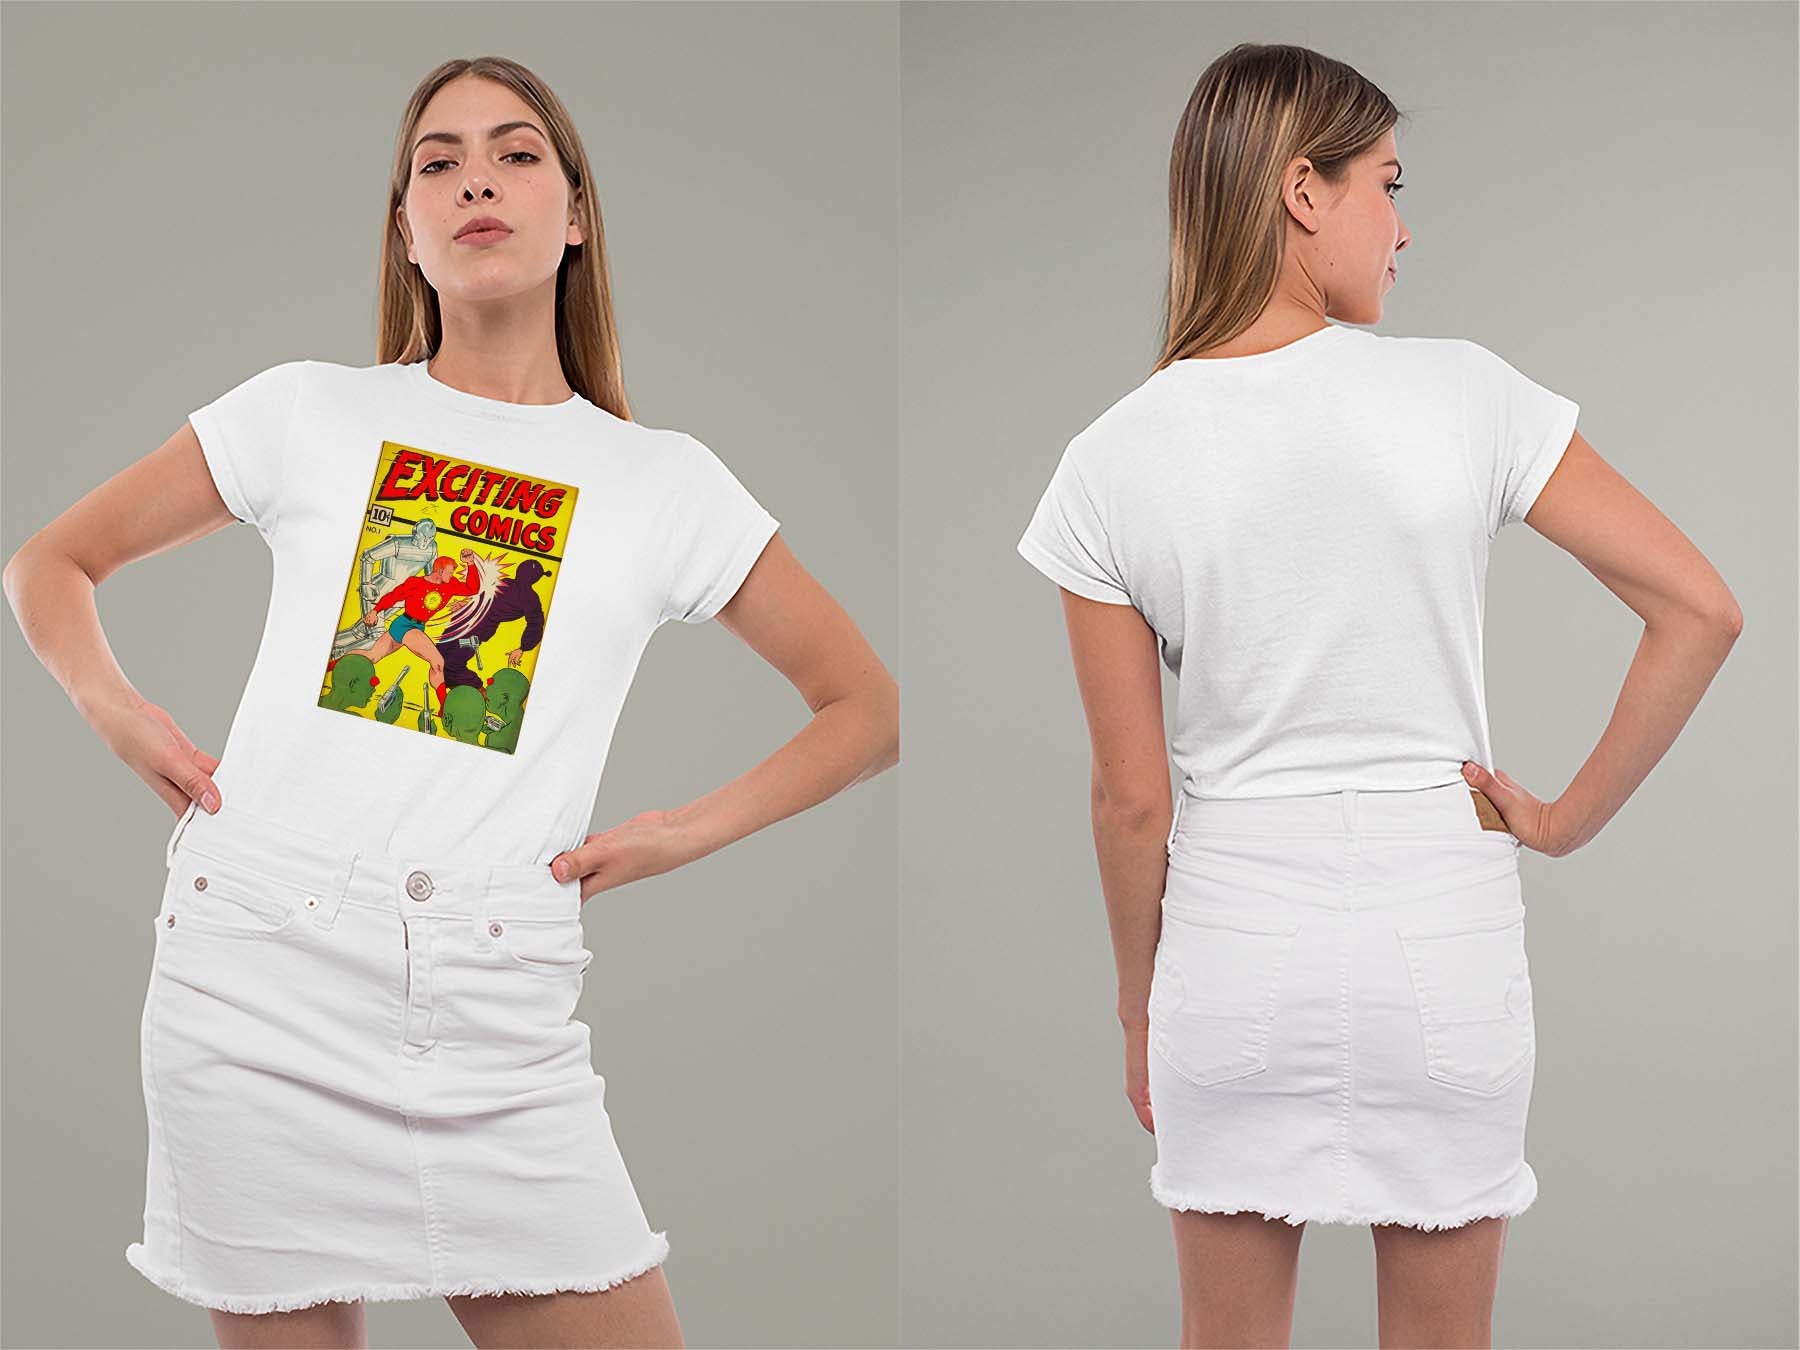 Exciting Comics No.1 Ladies Crew (Round) Neck Shirt Small White